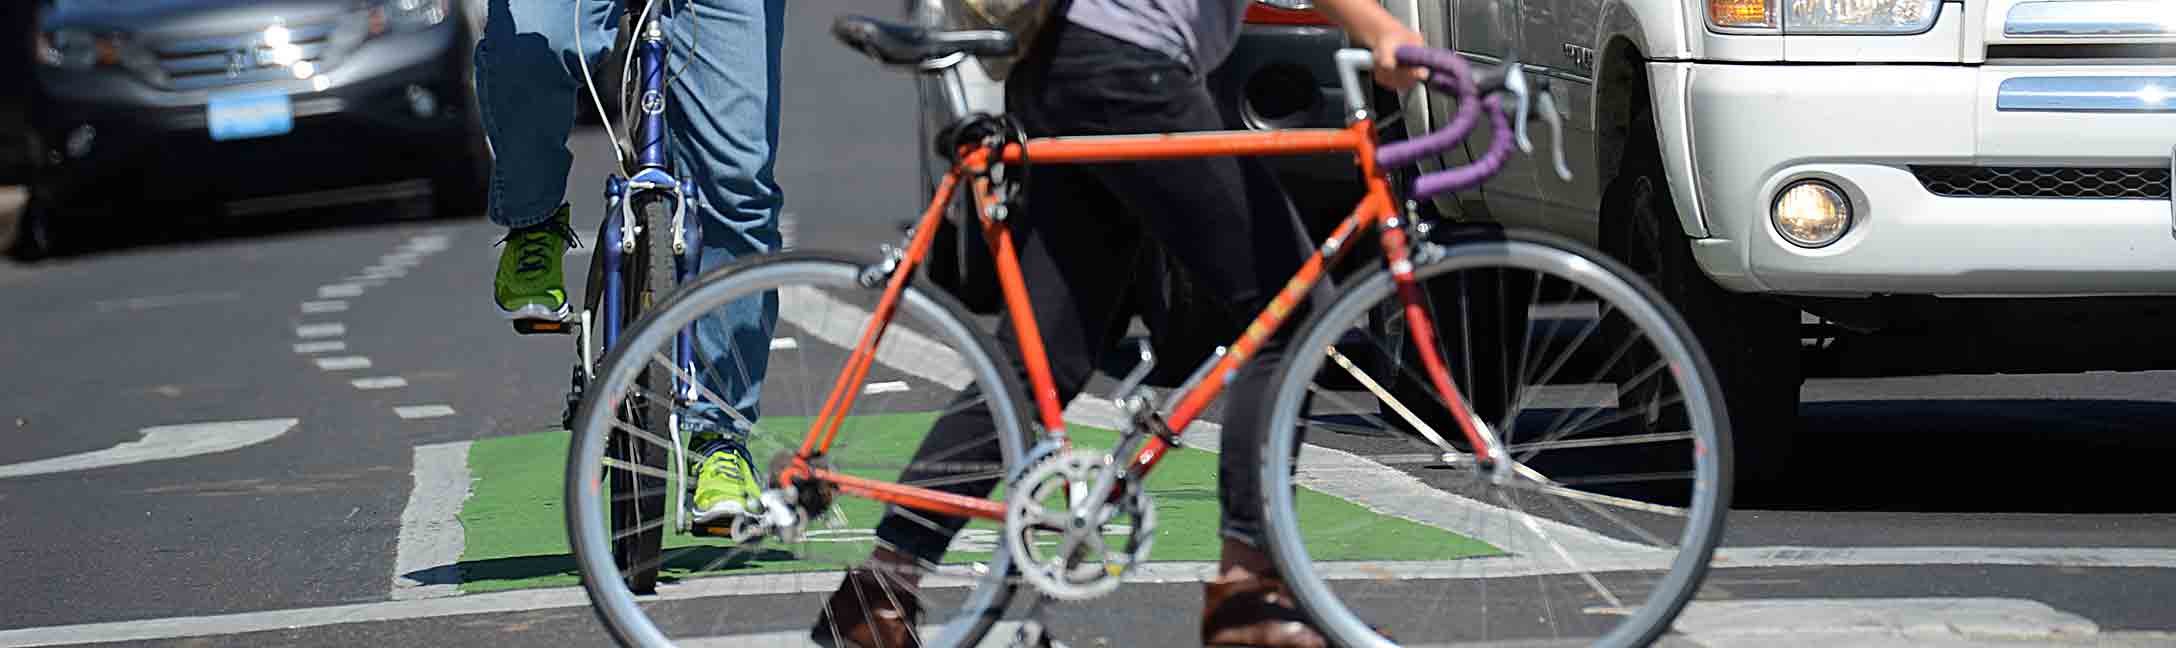 Bicycle in crosswalk, anoter waiting in bike lane